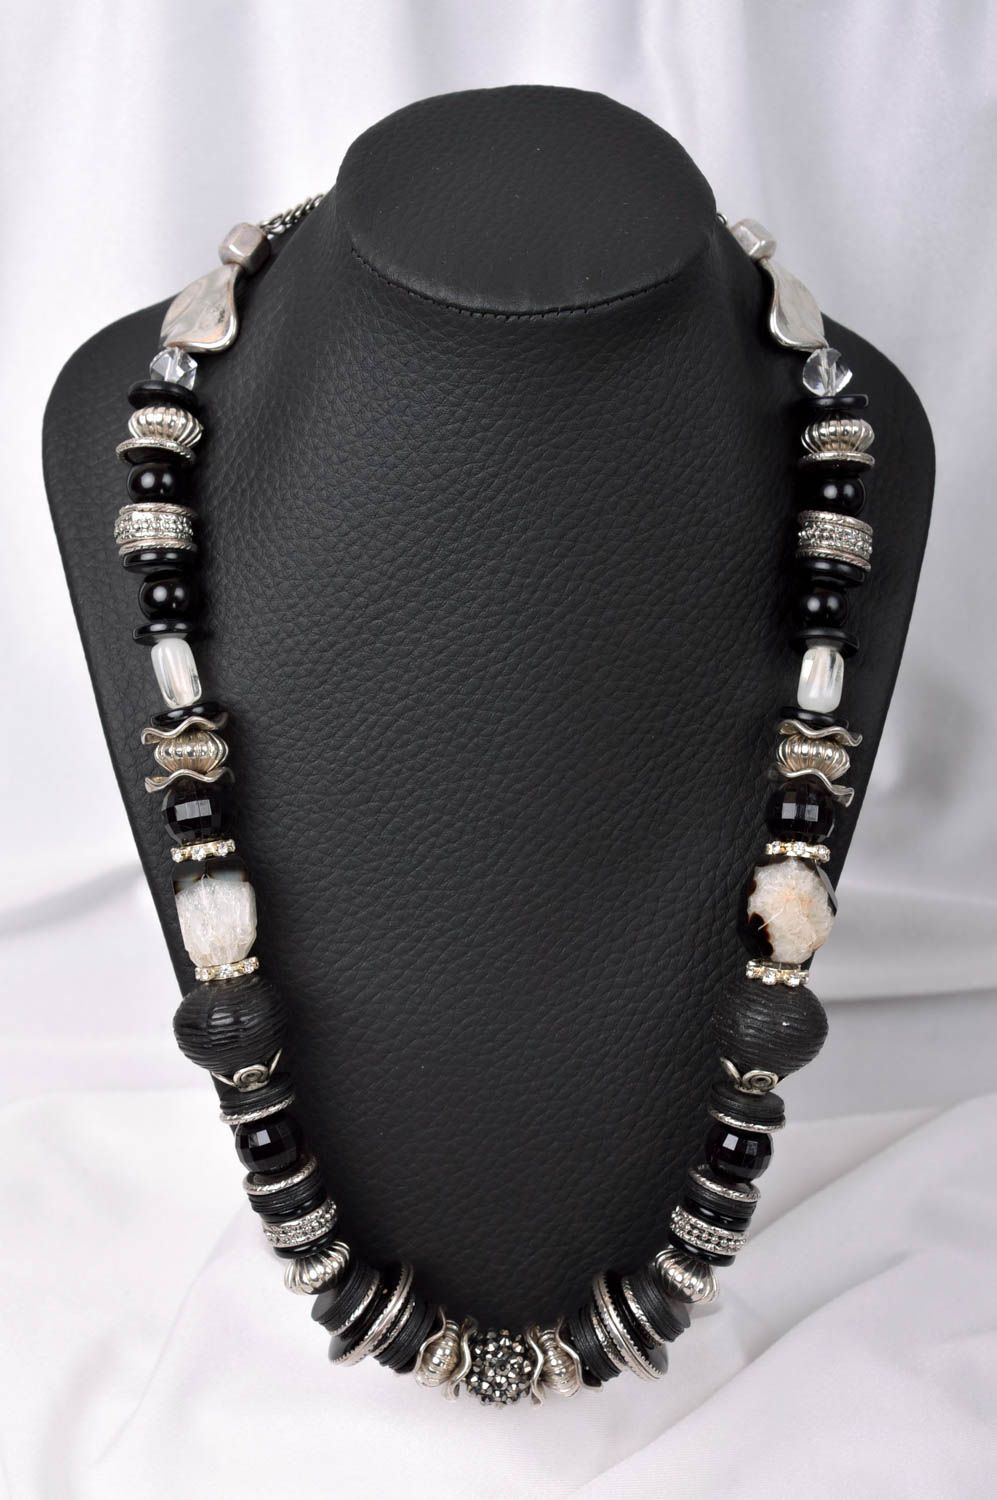 Handmade designer necklace jewelry with natural stone stylish black necklace photo 1